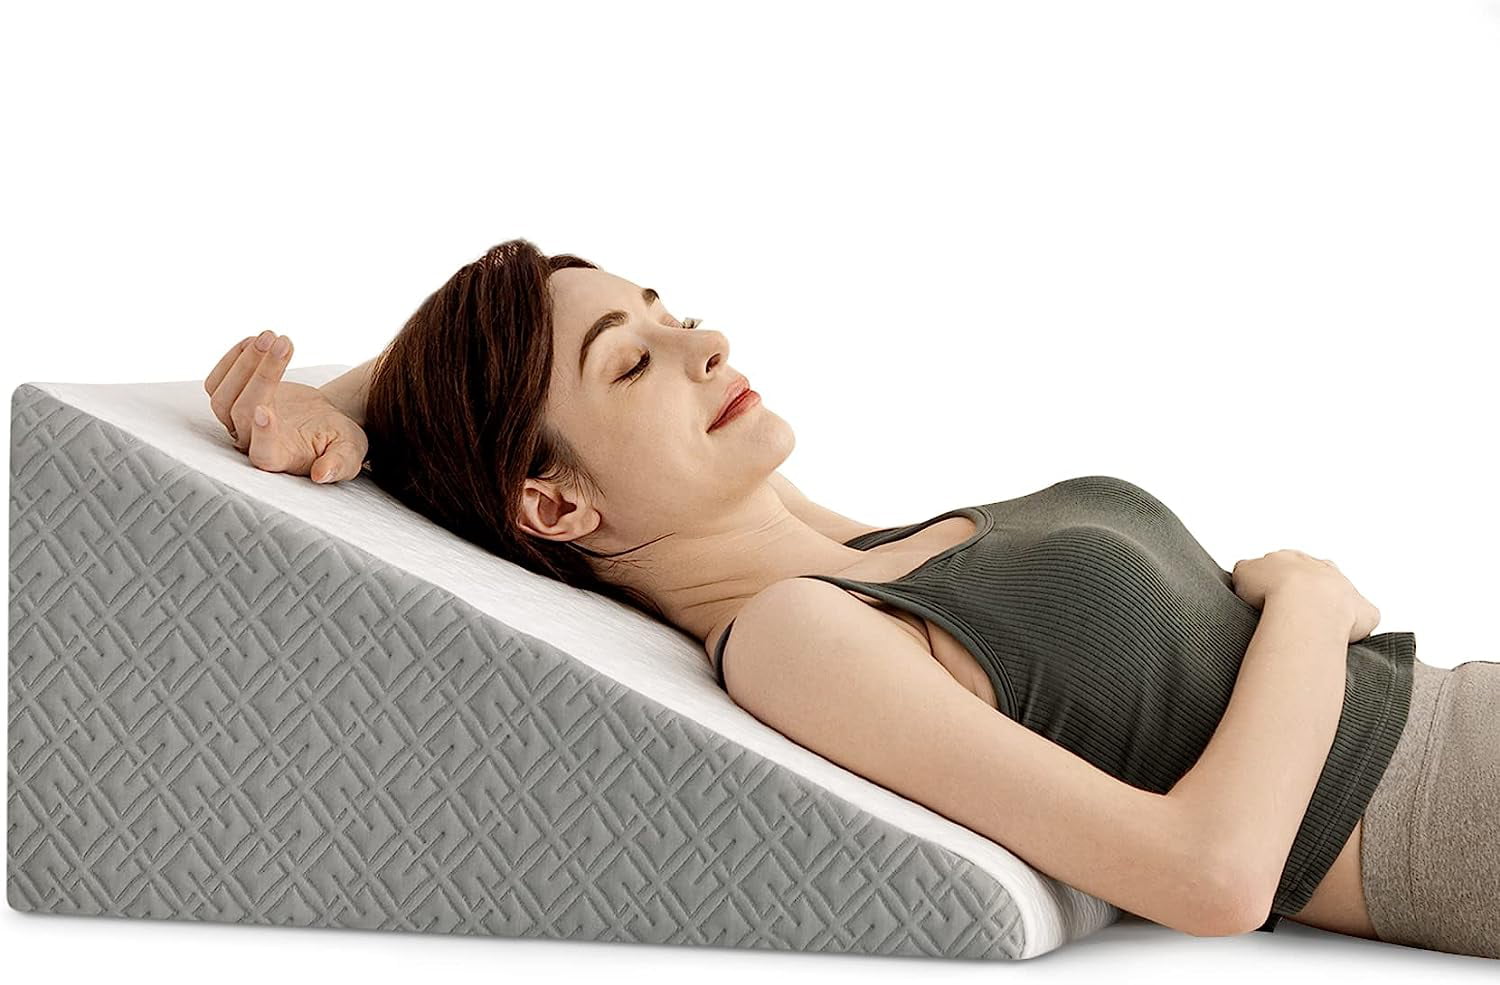 Ondekt Bed Wedge Pillow Multipurpose Adjustable Leg Support Pillow Cooling Gel Memory Foam Top - Helps for Acid Reflux Heartburn, Allergies, Snoring